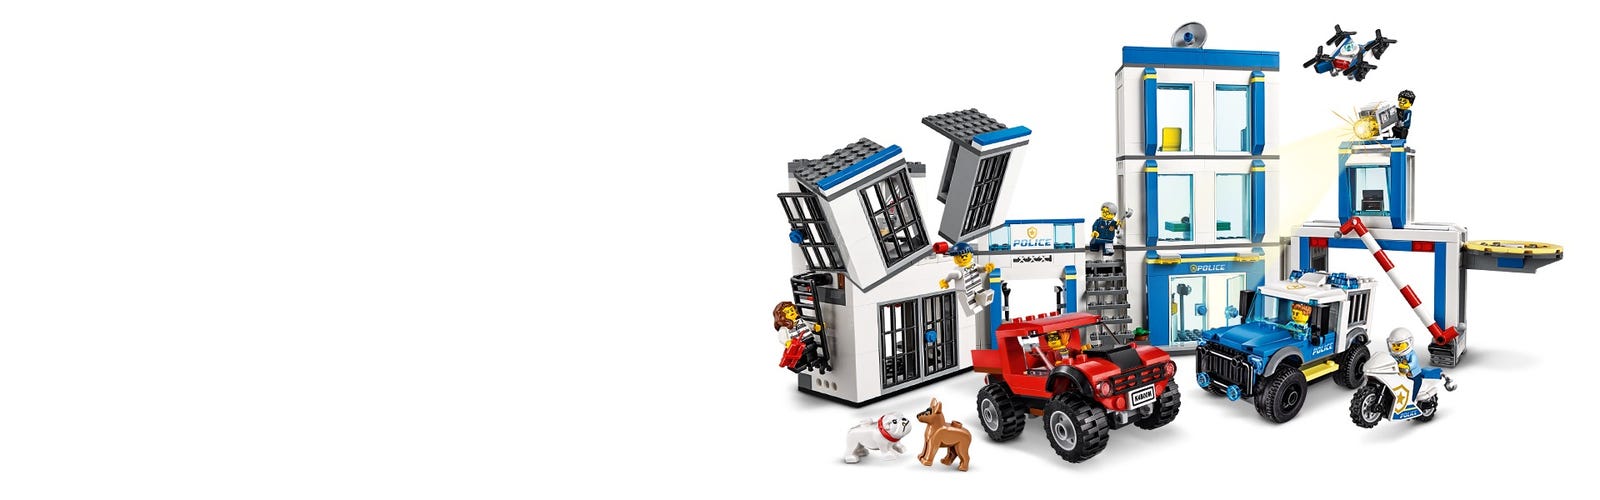 LEGO City - Comisaría de Policía - 60246, Lego City